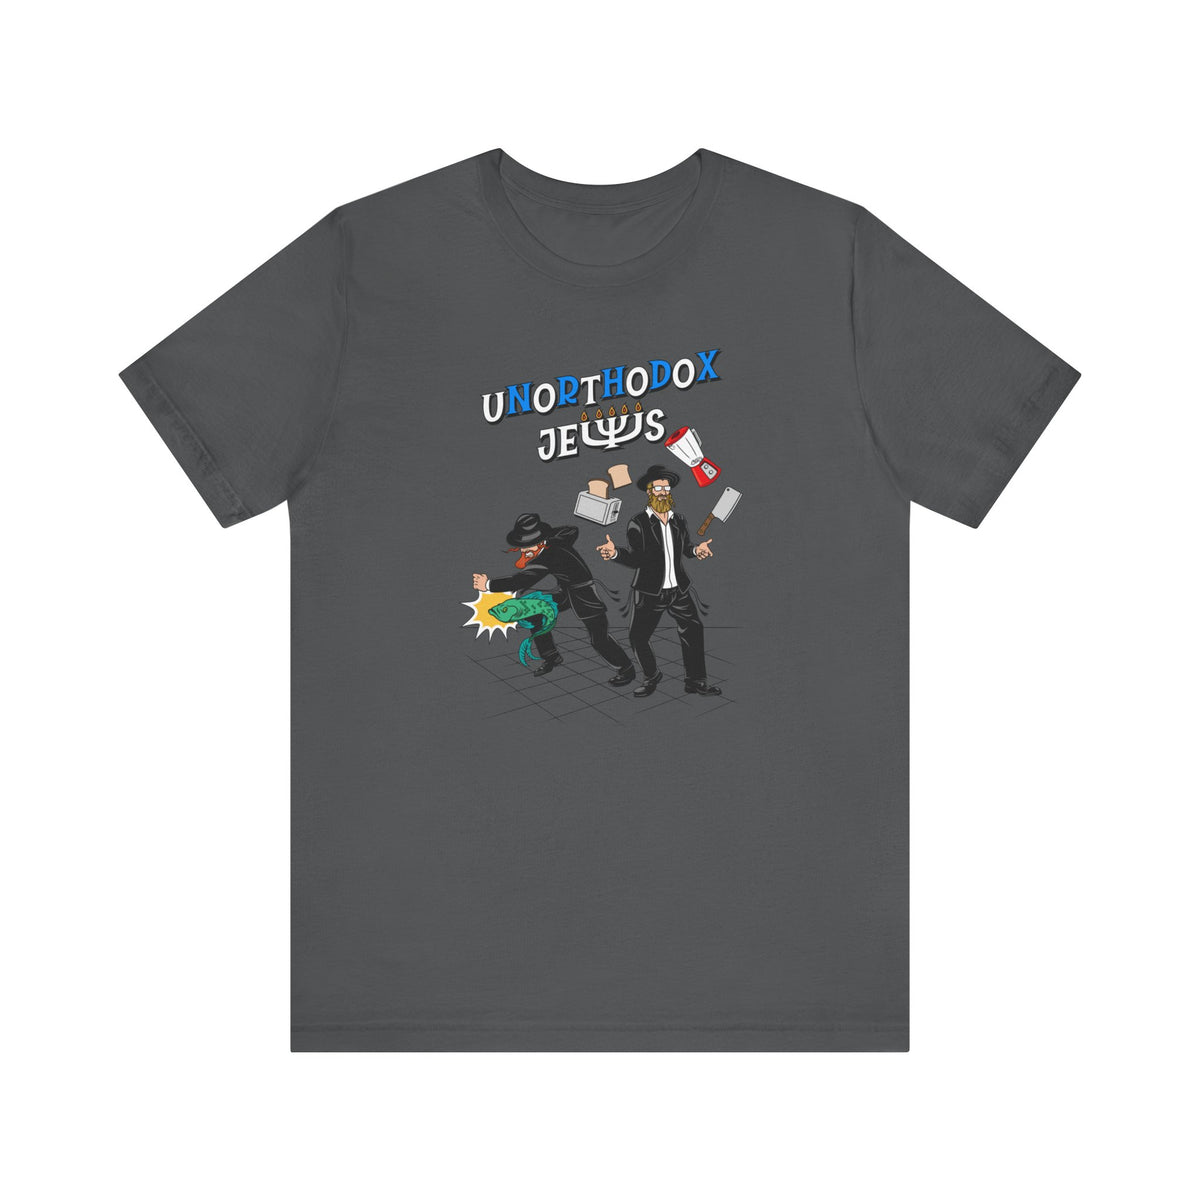 Unorthodox Jews - Men's T-Shirt